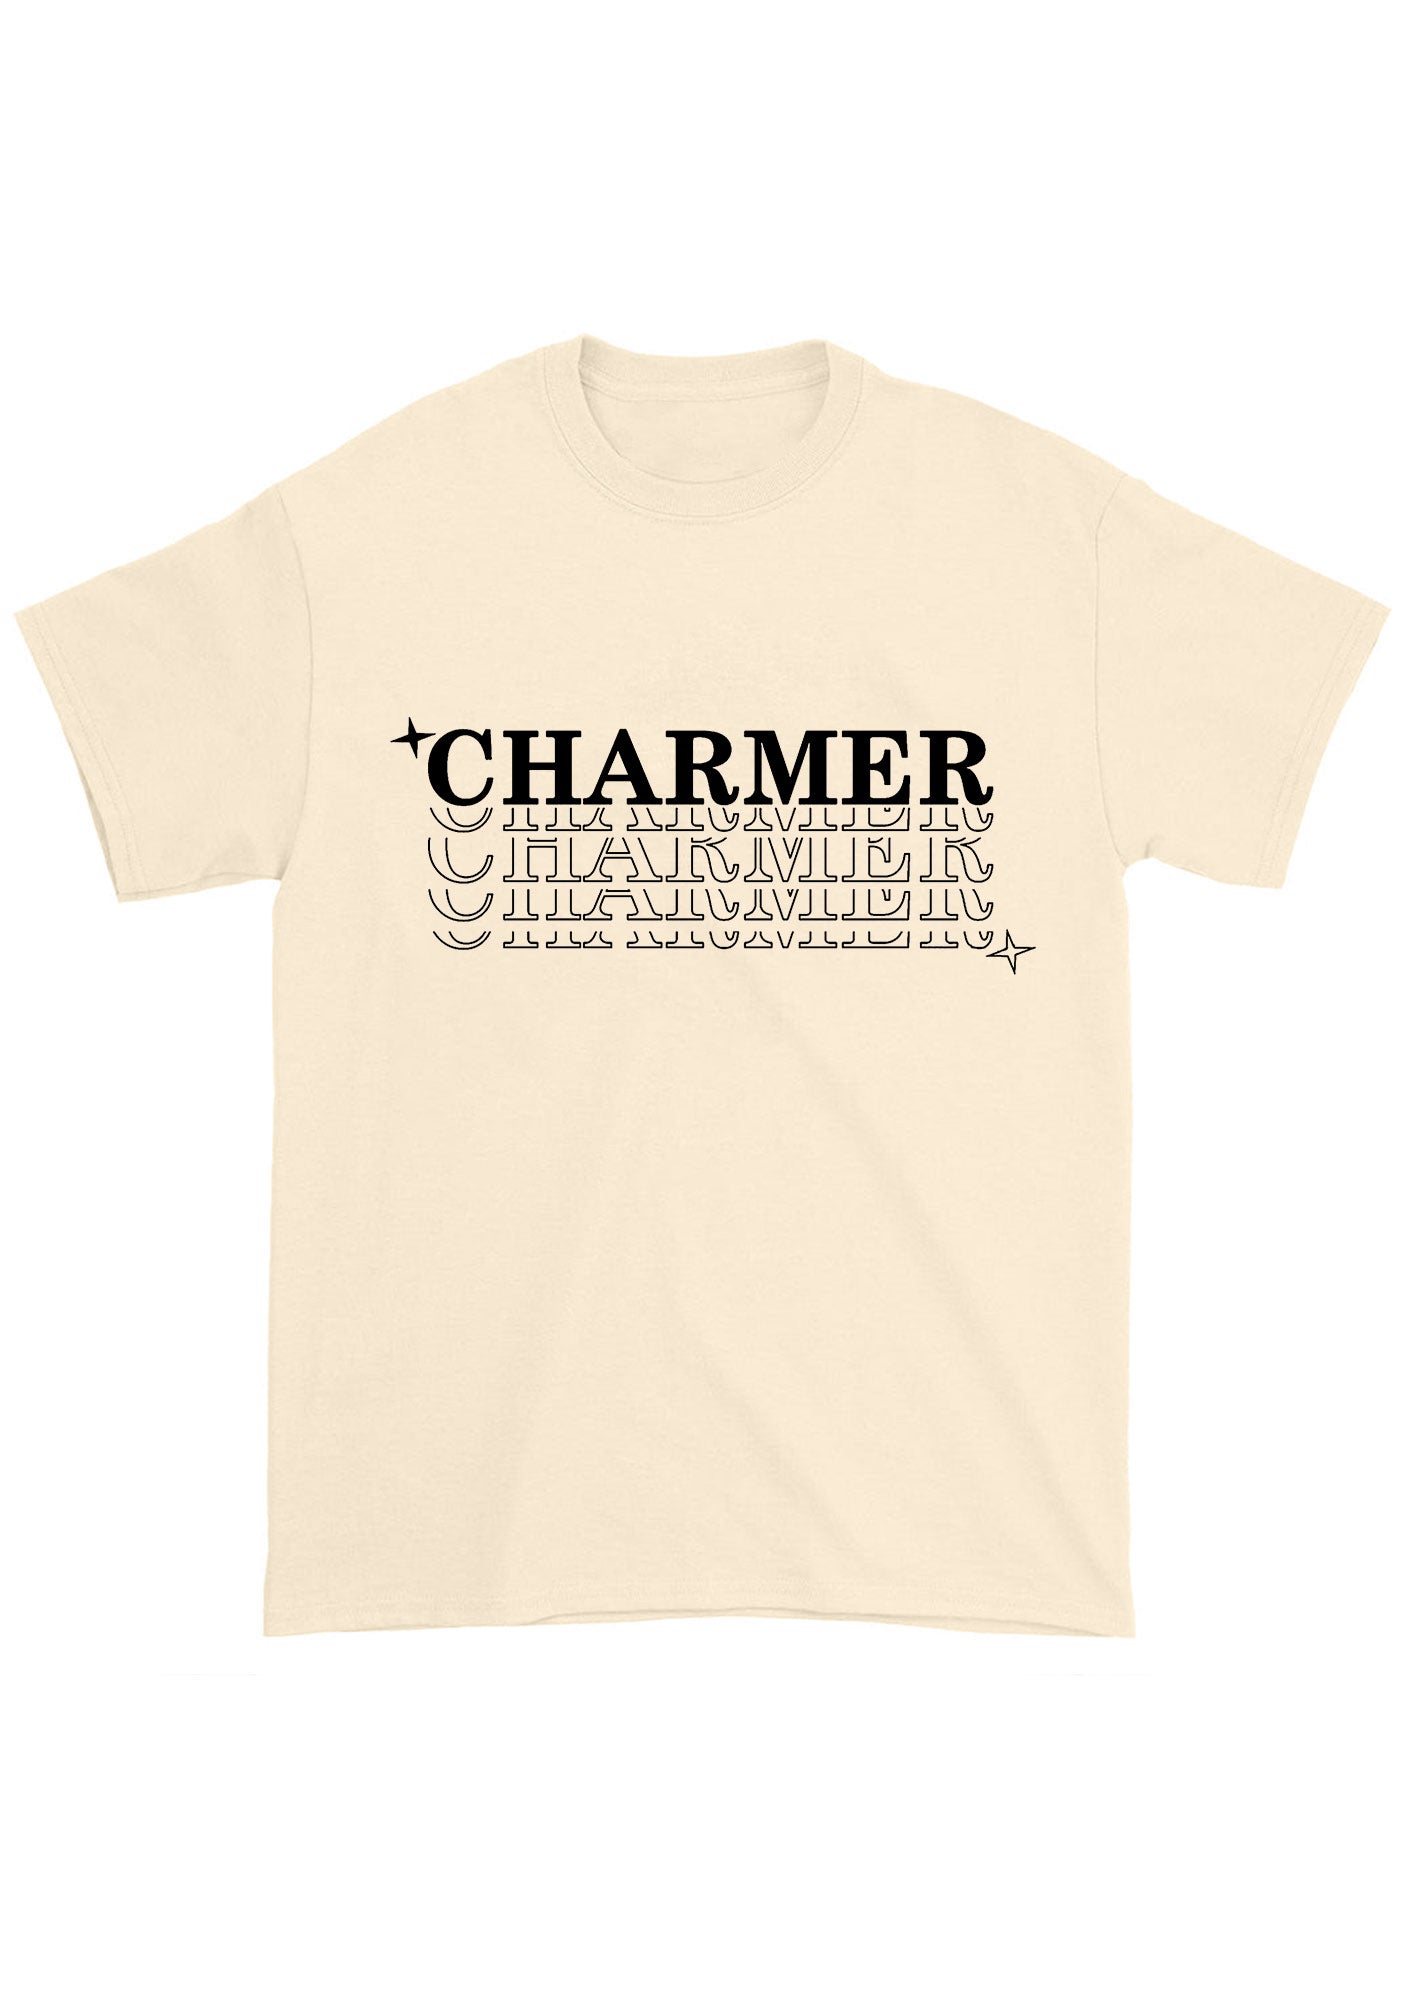 Charmer Skz Kpop Chunky Shirt